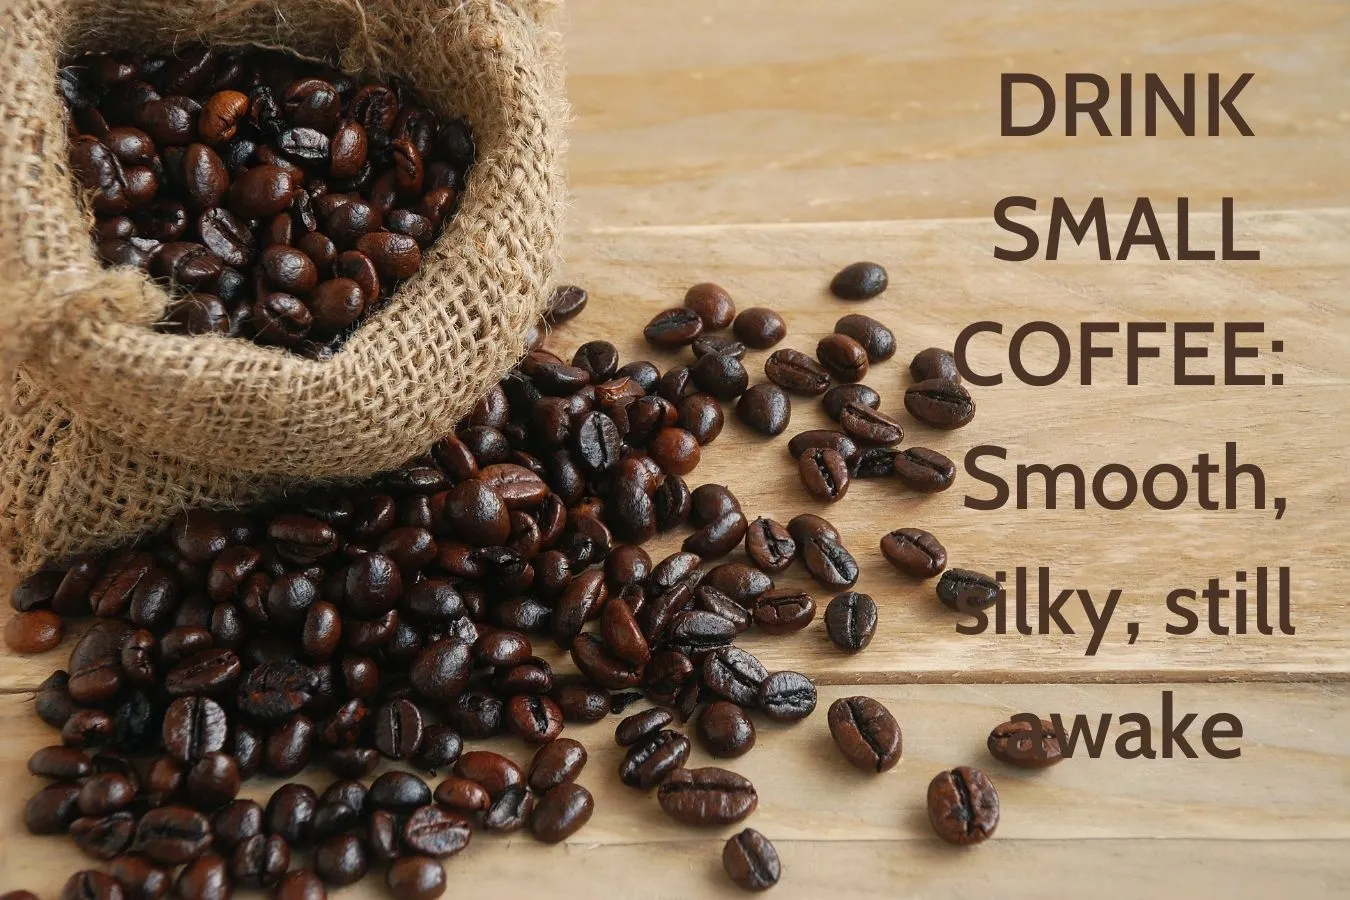 Drink Small Coffee – Smooth, silky, still awake